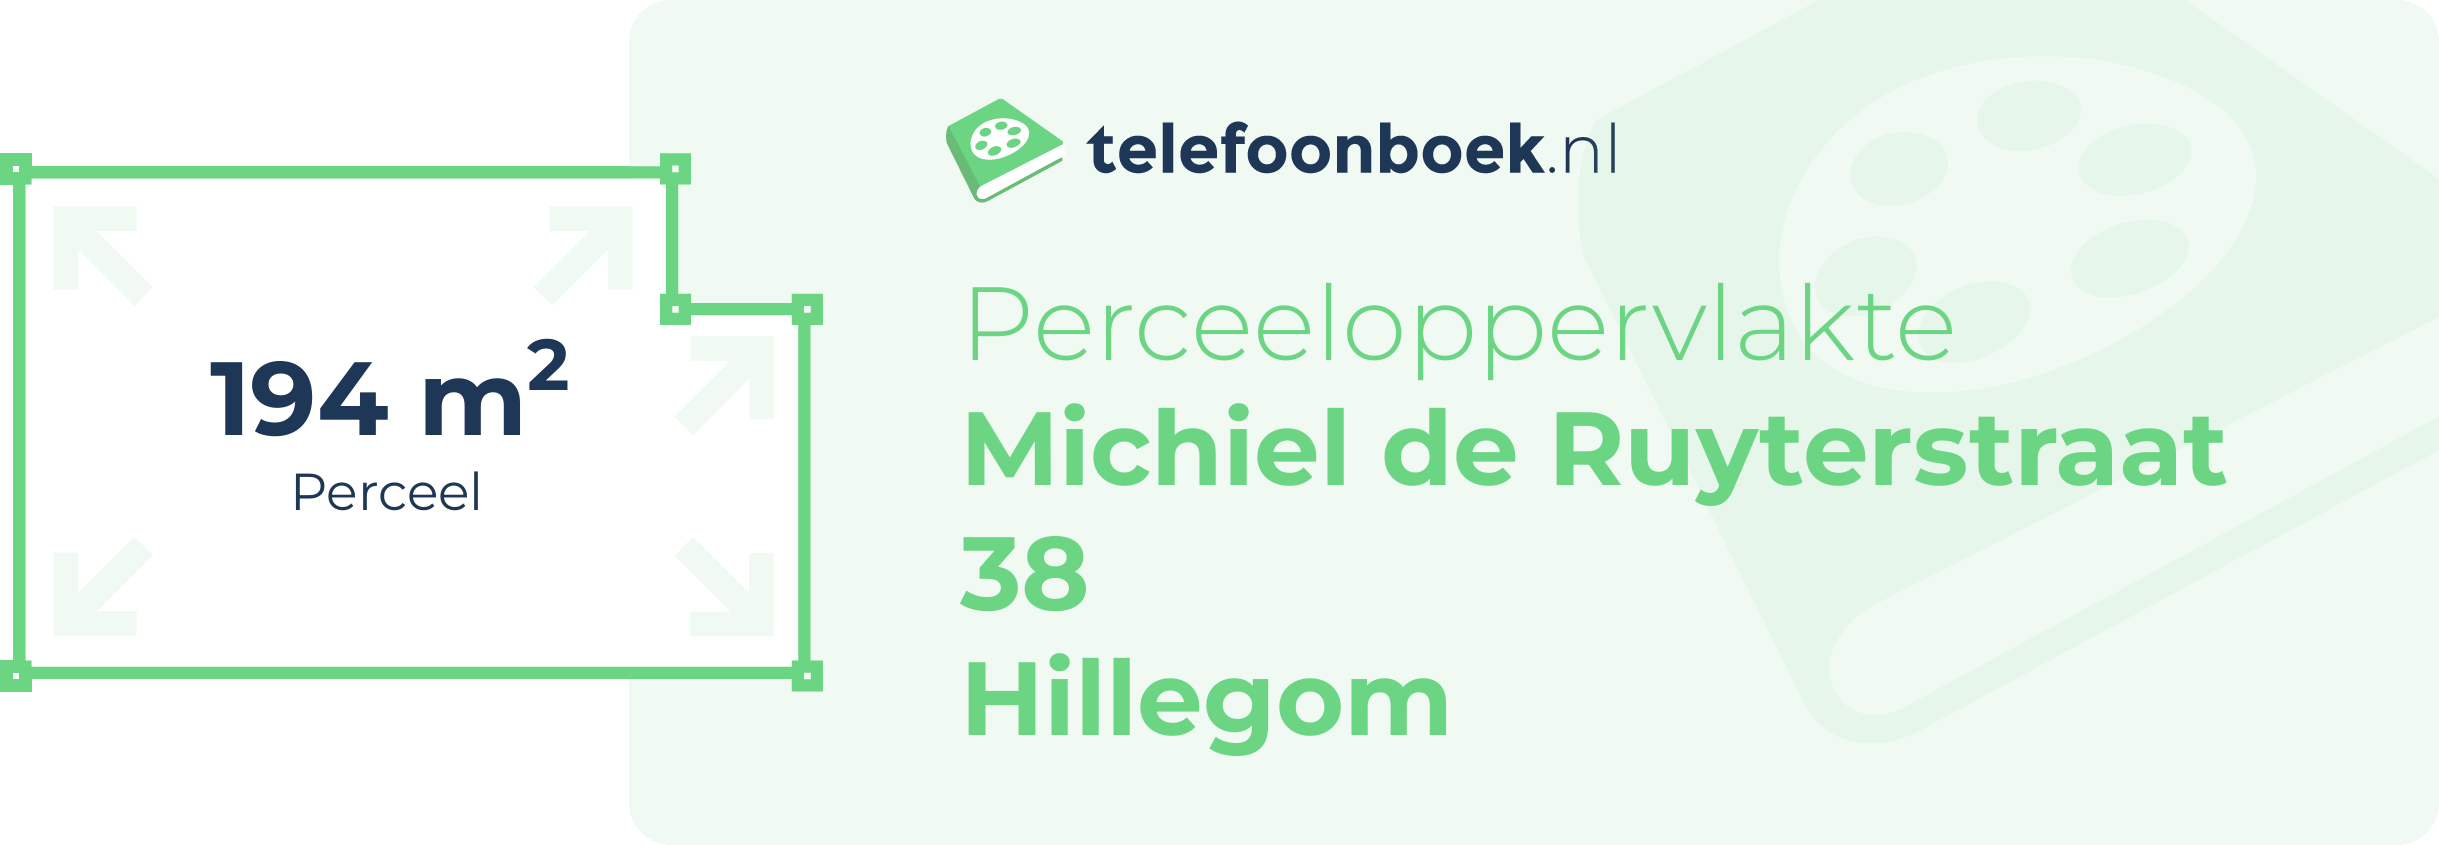 Perceeloppervlakte Michiel De Ruyterstraat 38 Hillegom